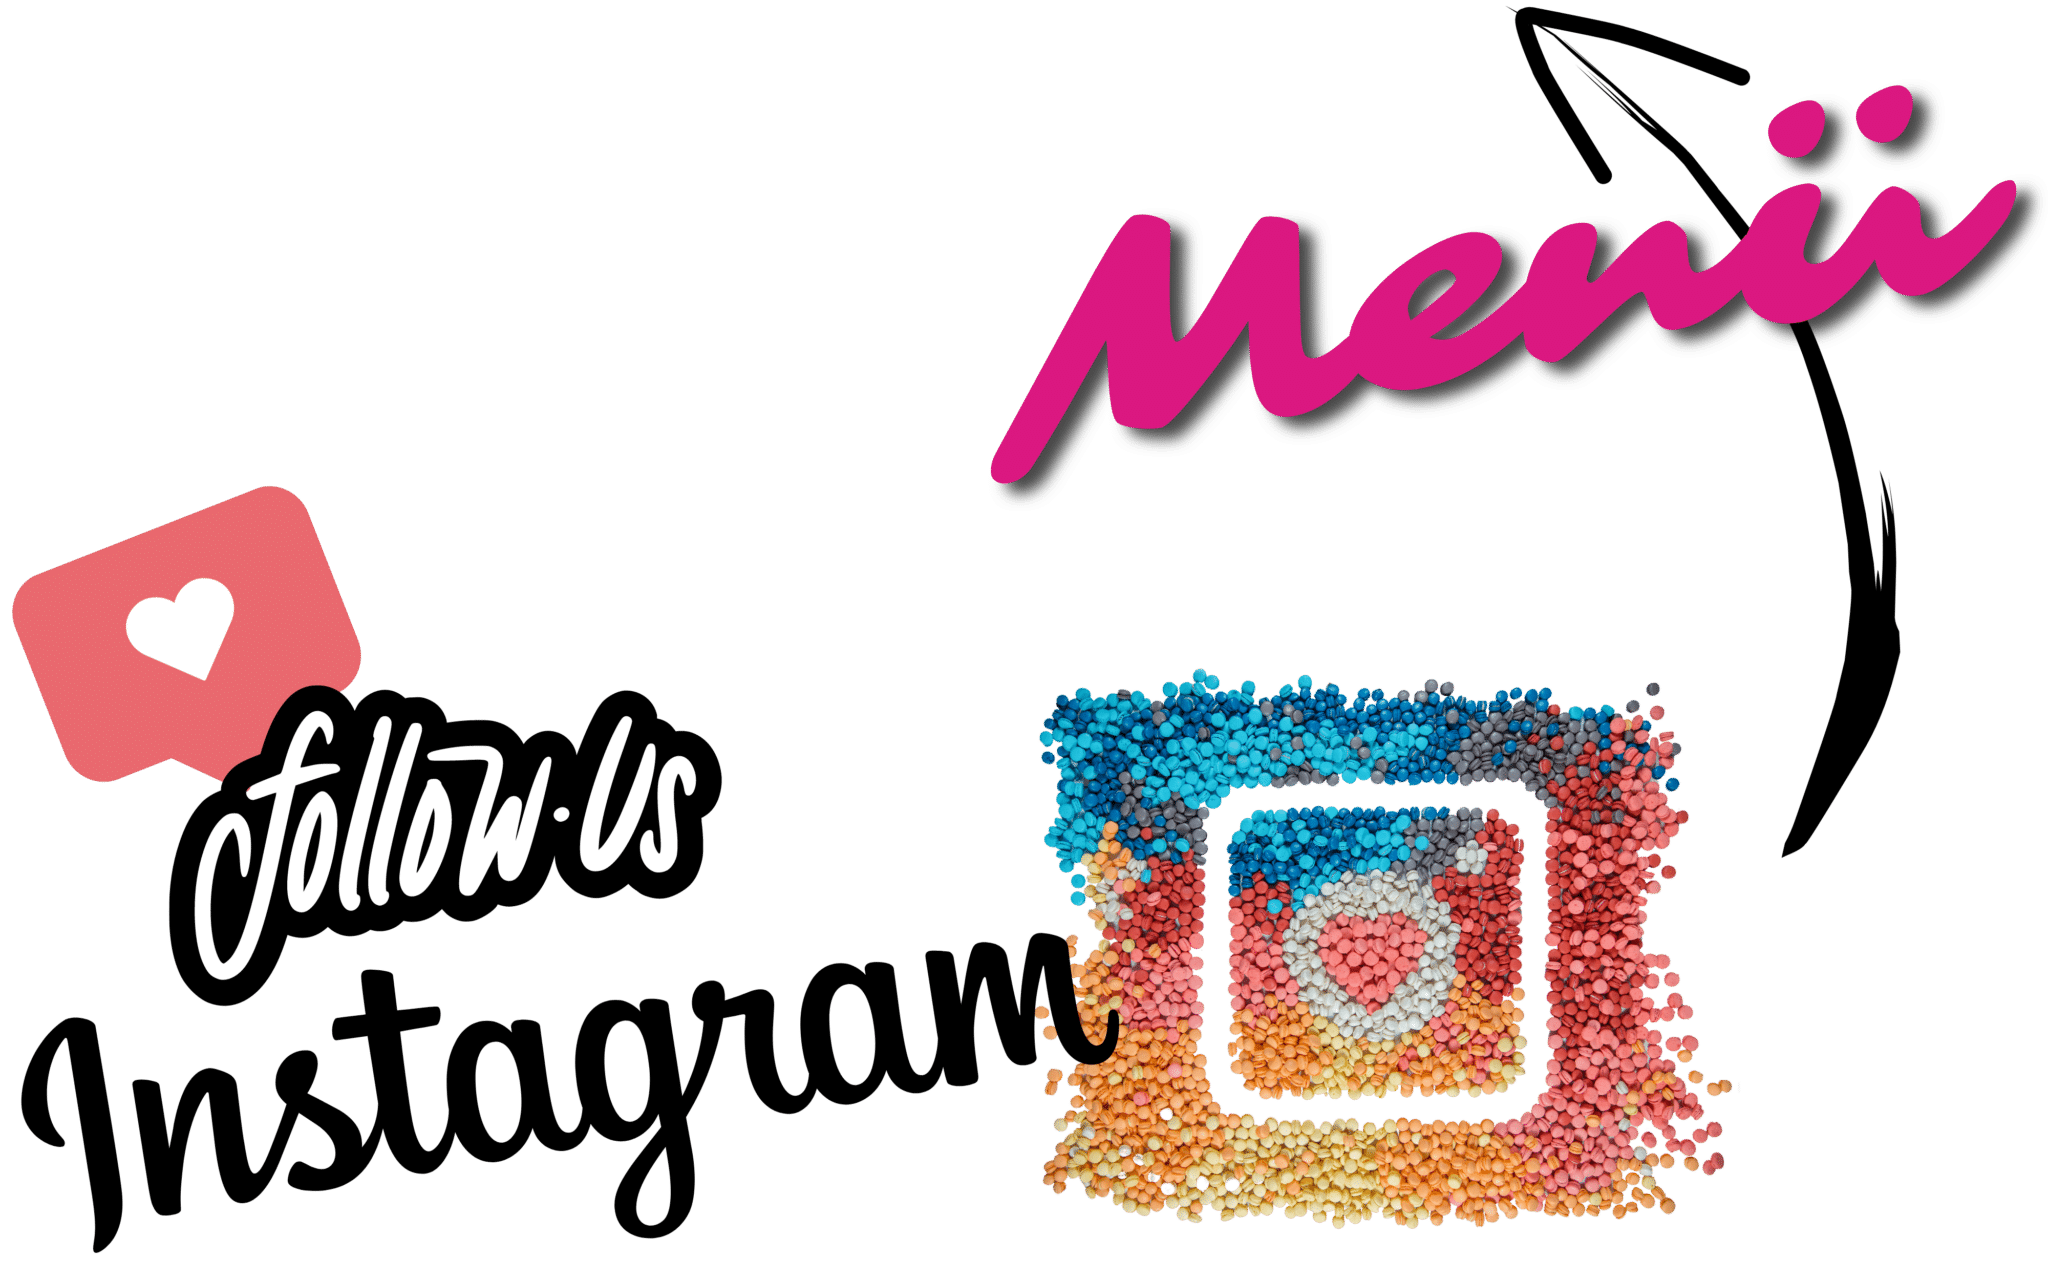 Kicura bestes Nagelstudio Muenchen Instagram Follow us menu illustration 20230307 014024